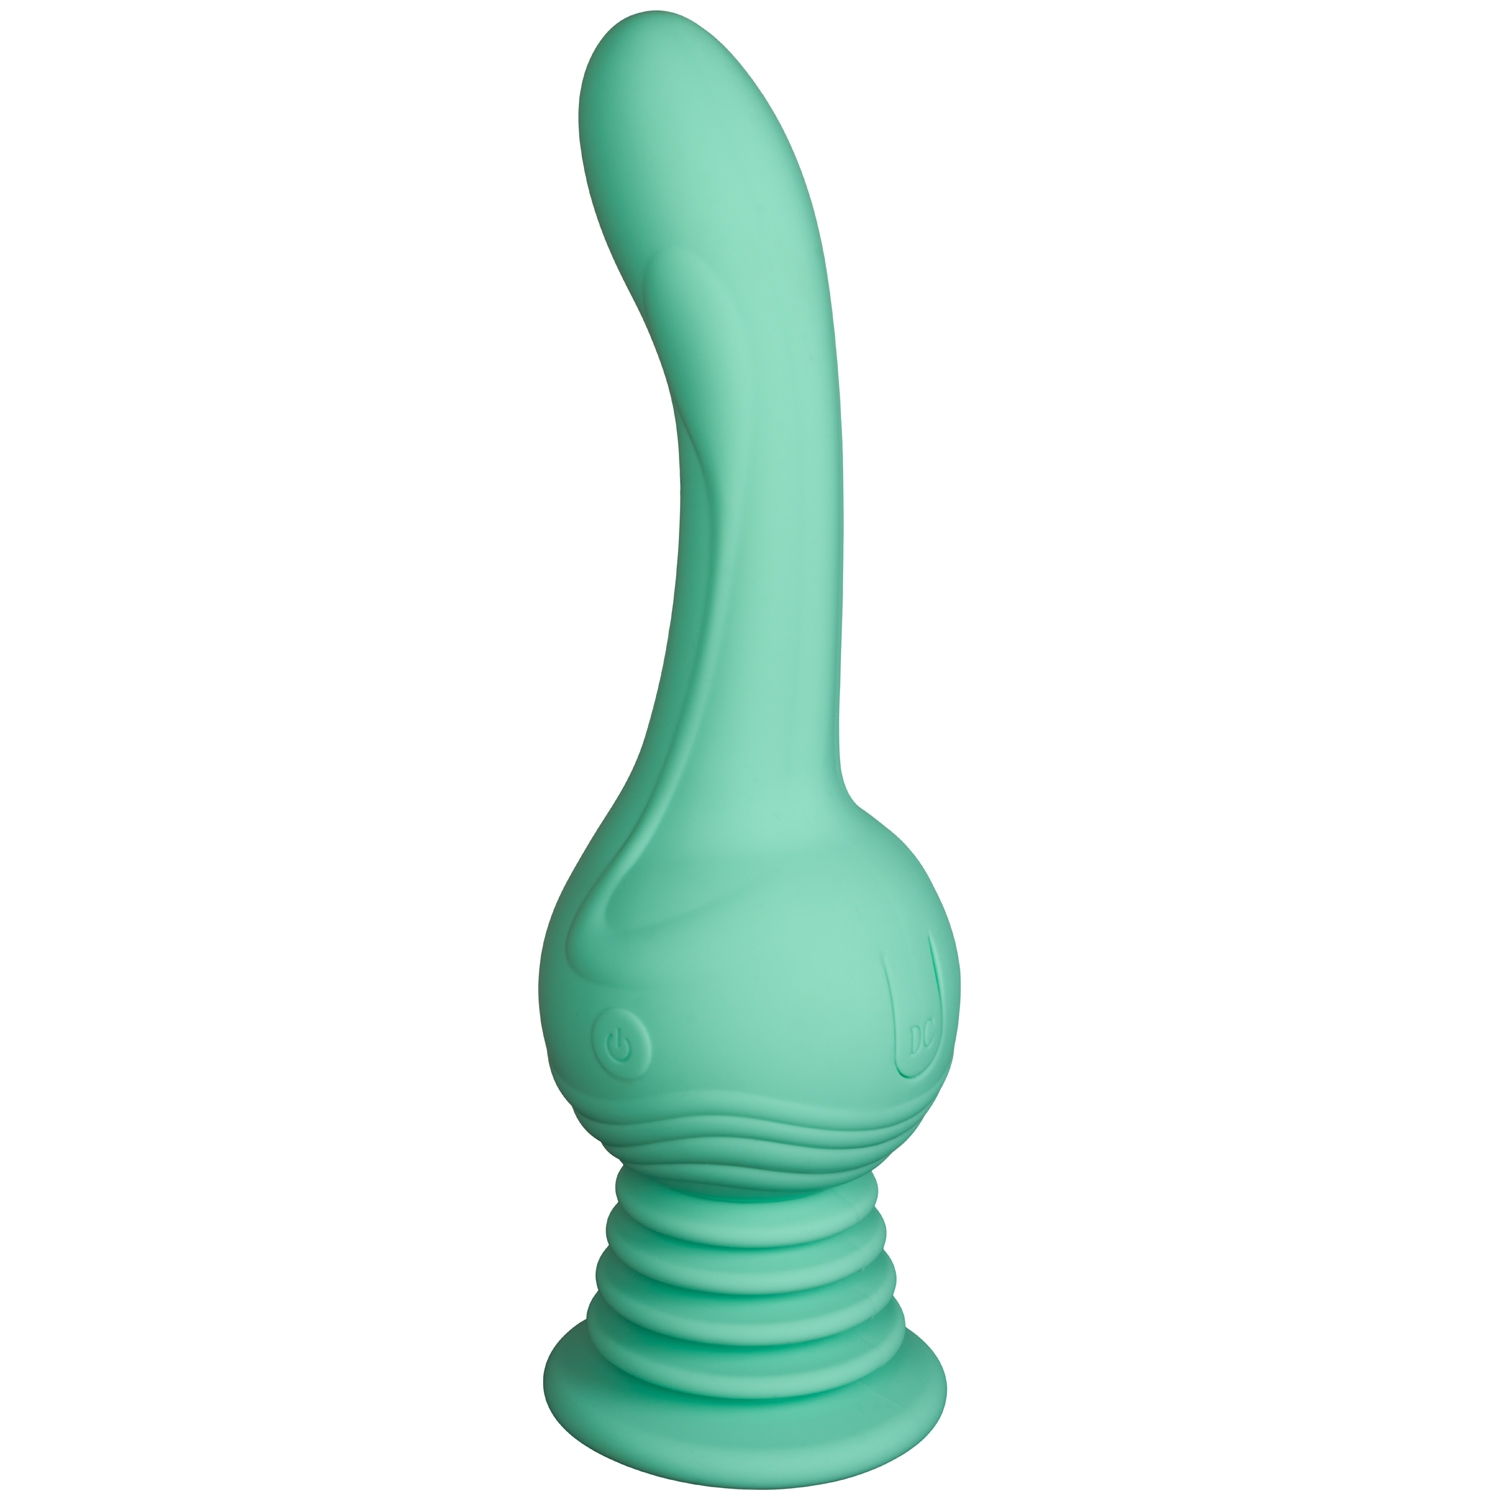 Tracy's Dog Centrifugal Vaginal Vibrator - Turquoise